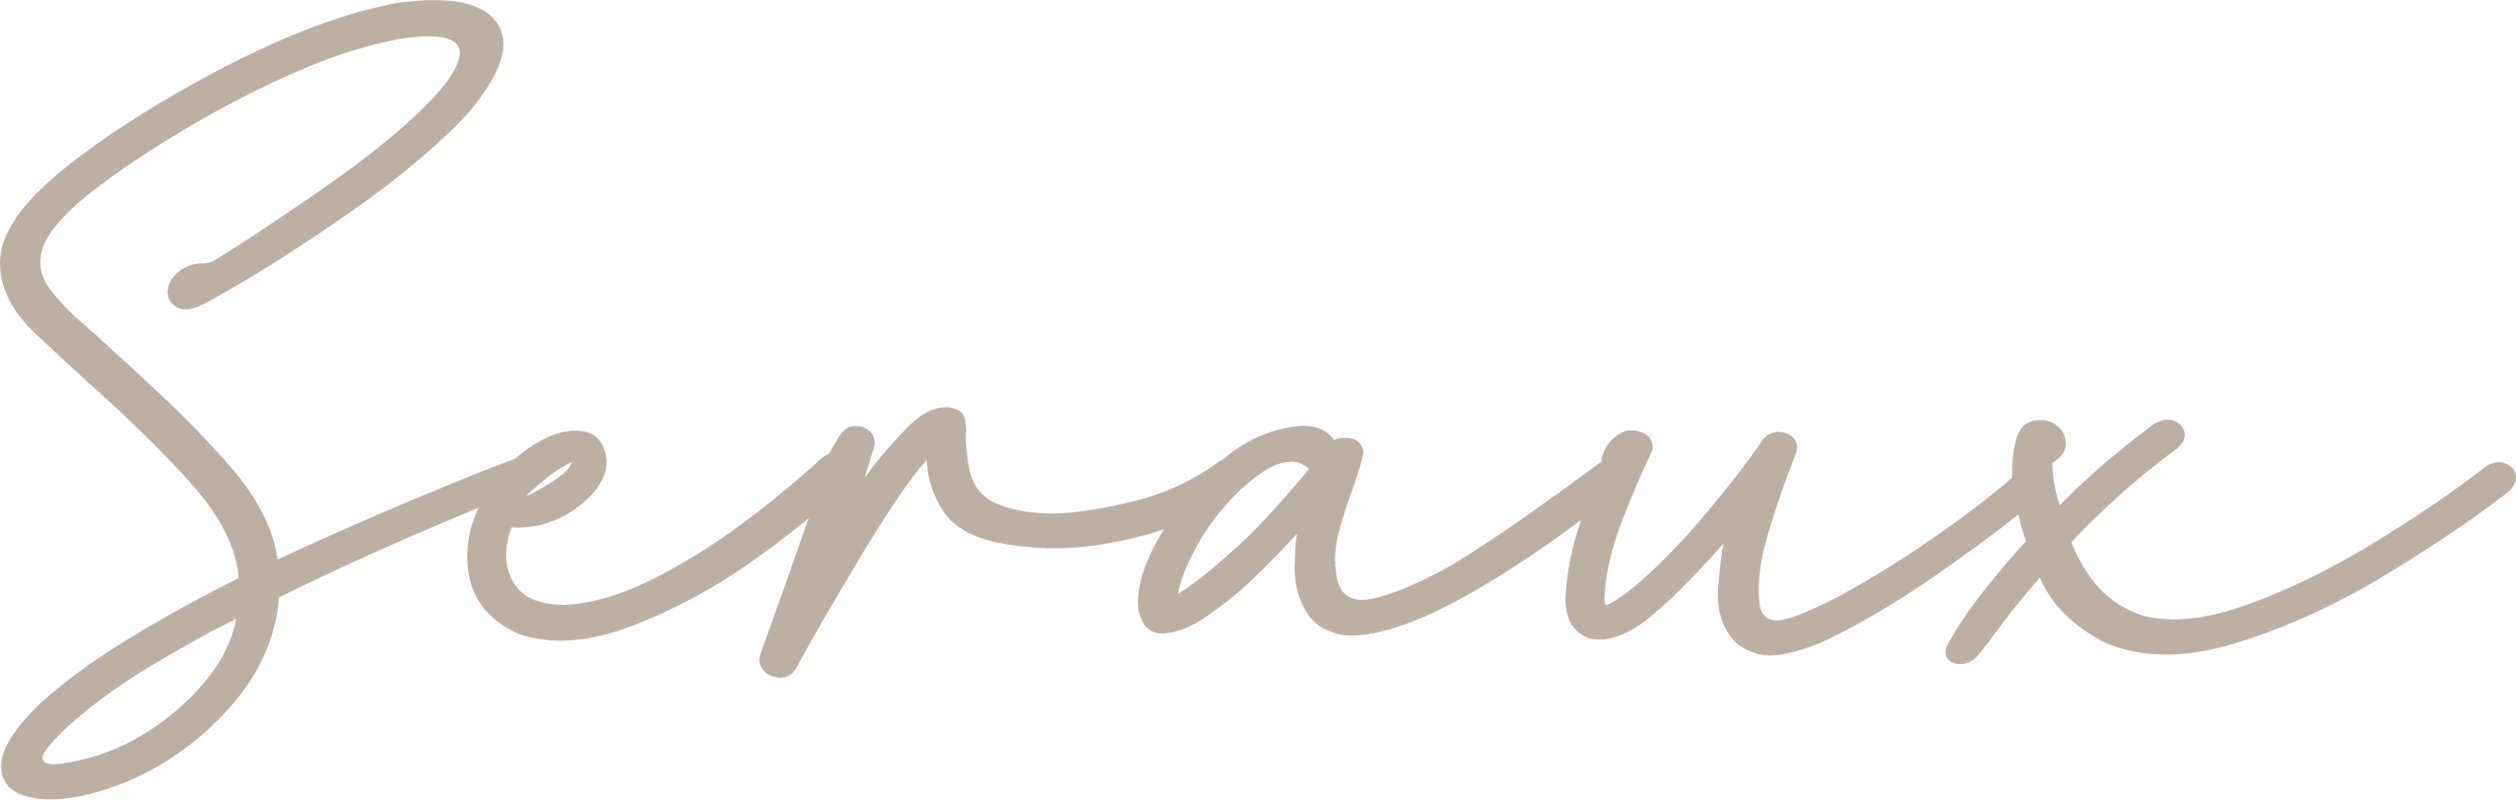 Seraux Logo Text